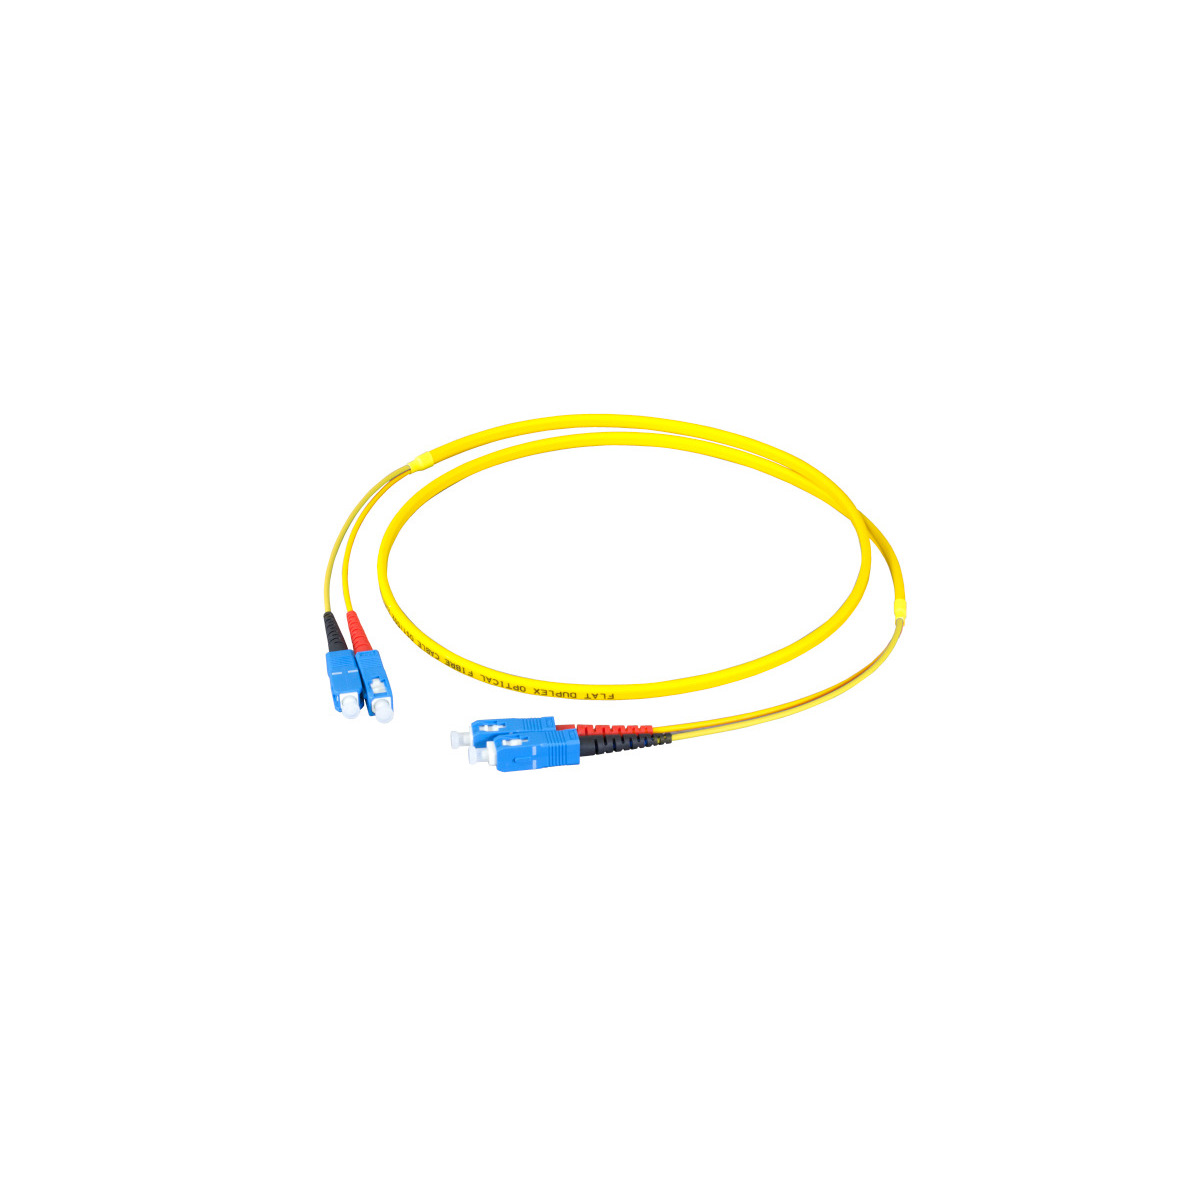 COMMUNIK Kabel Duplex Flachjumper m / 20 - SC SC, Glasfaserkabel